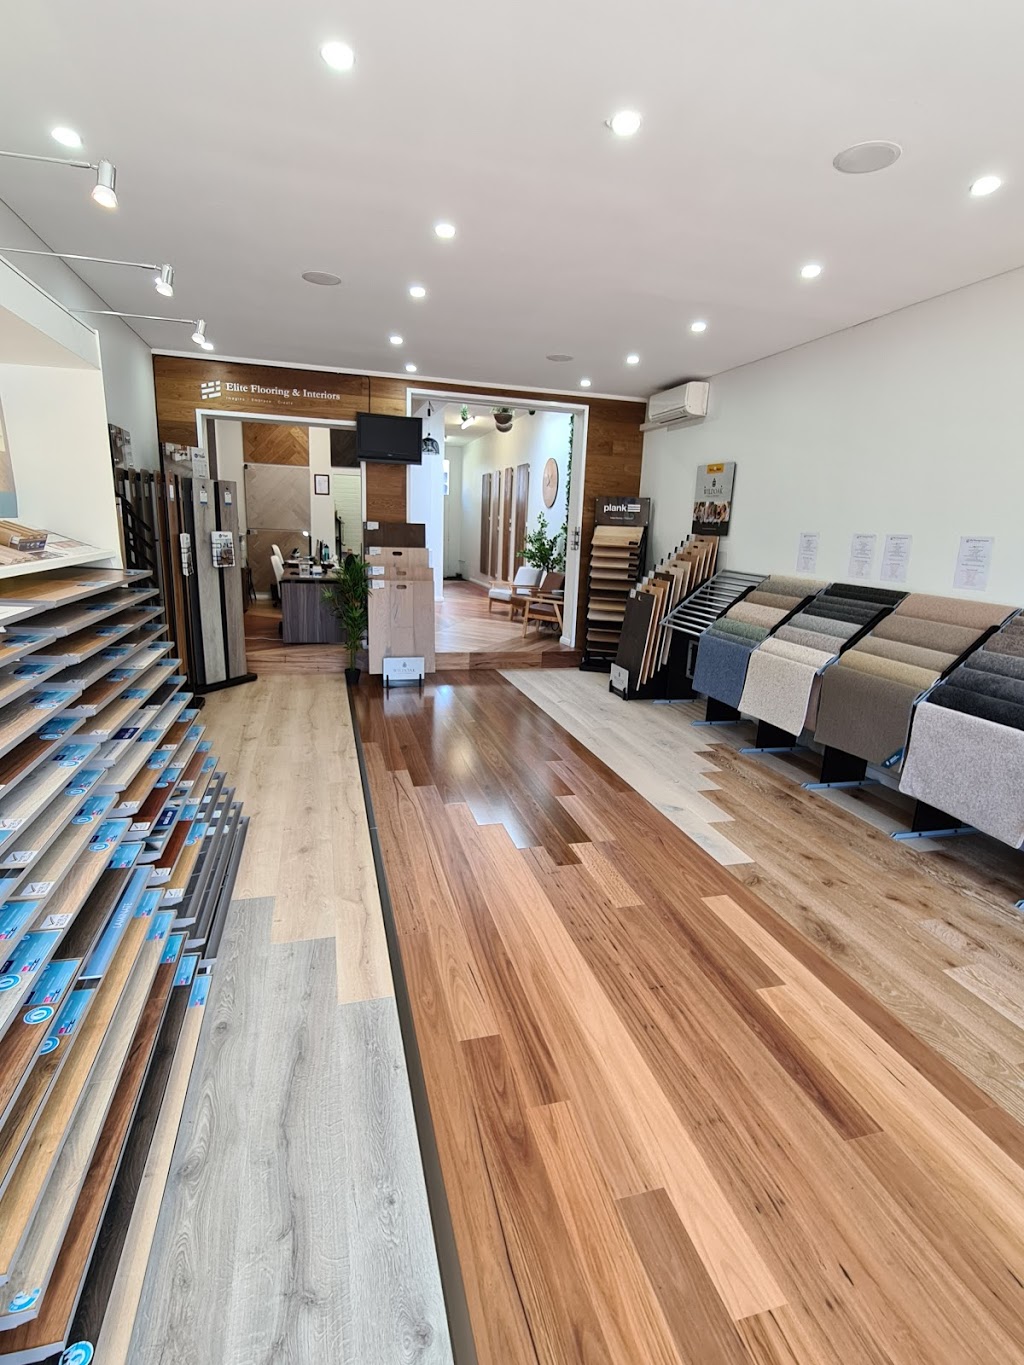 Elite Flooring & Interiors Pty Limited | 1429 Pittwater Rd, Narrabeen NSW 2101, Australia | Phone: (02) 8998 6941